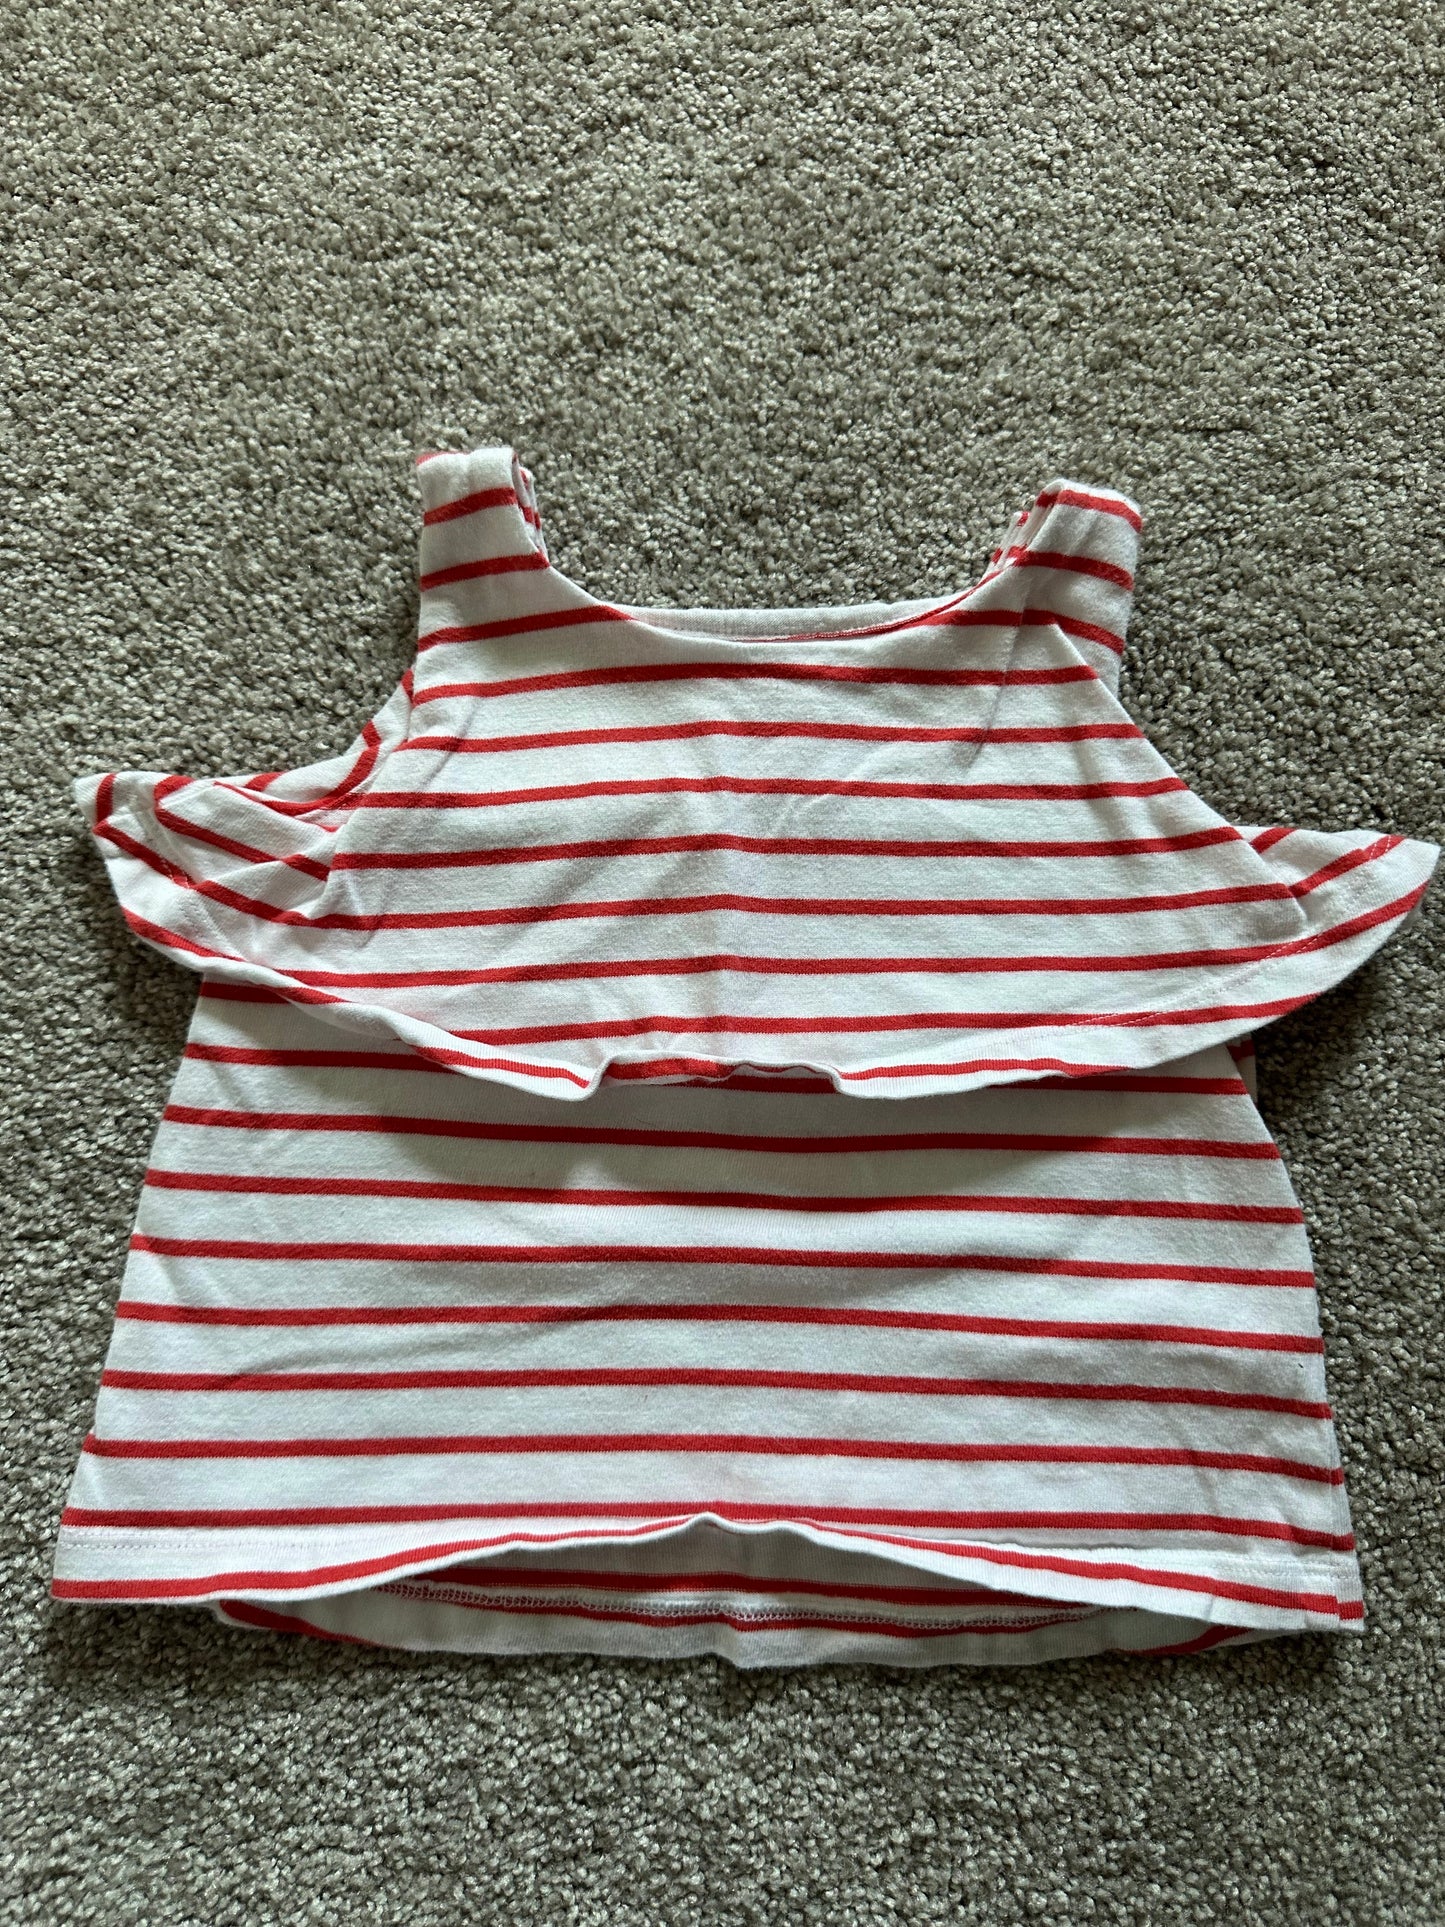 Janie & Jack | shirts & short bundle (3) | girl | multi-color | 18-24 months | PPU Anderson